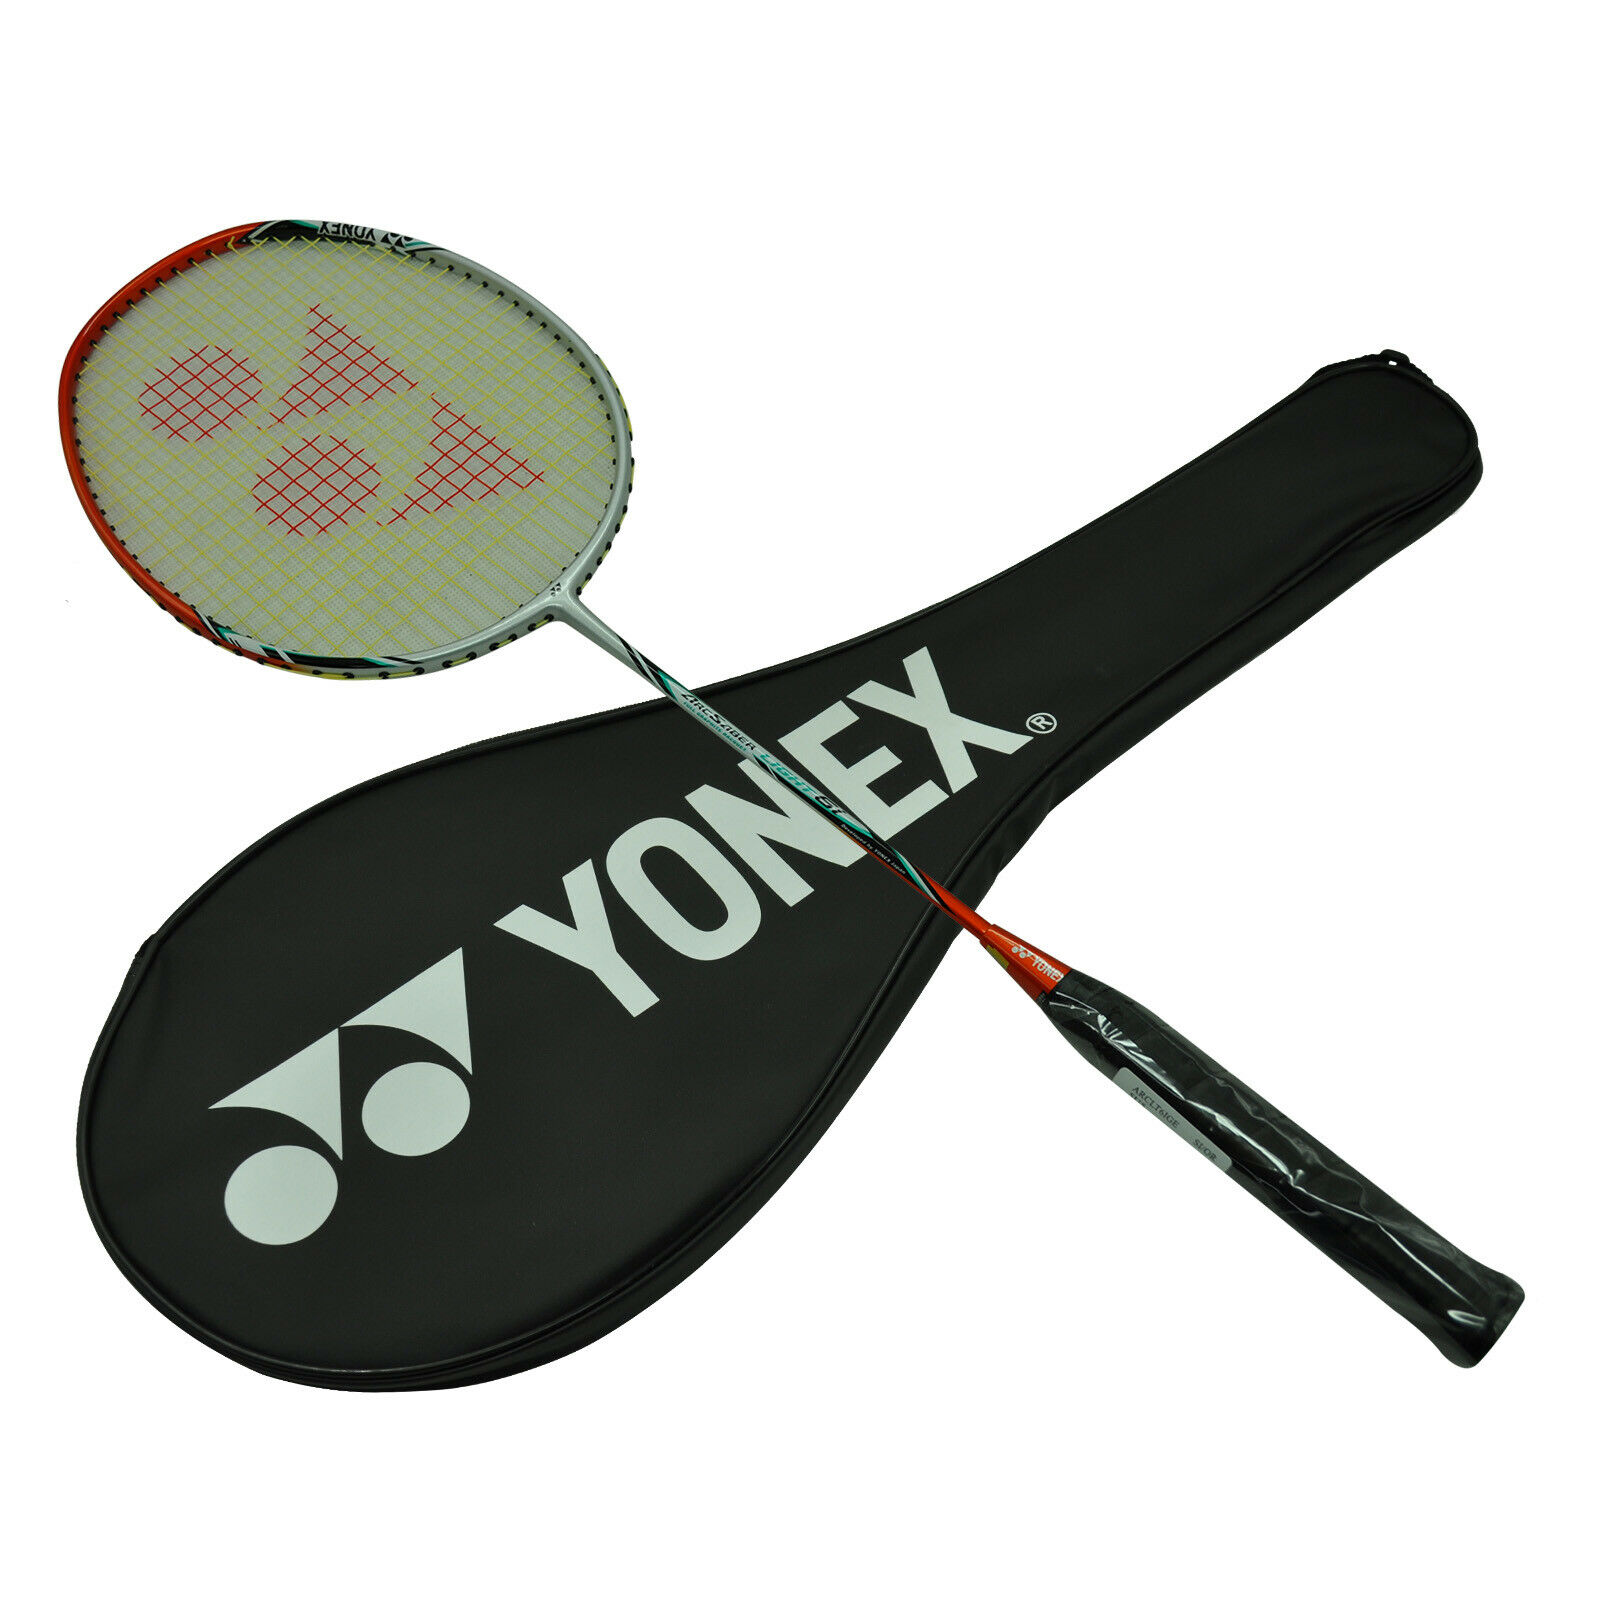 YONEX Arcsaver Light 6i Badminton Pre-Strung Racket Silver/Orange 5UG5